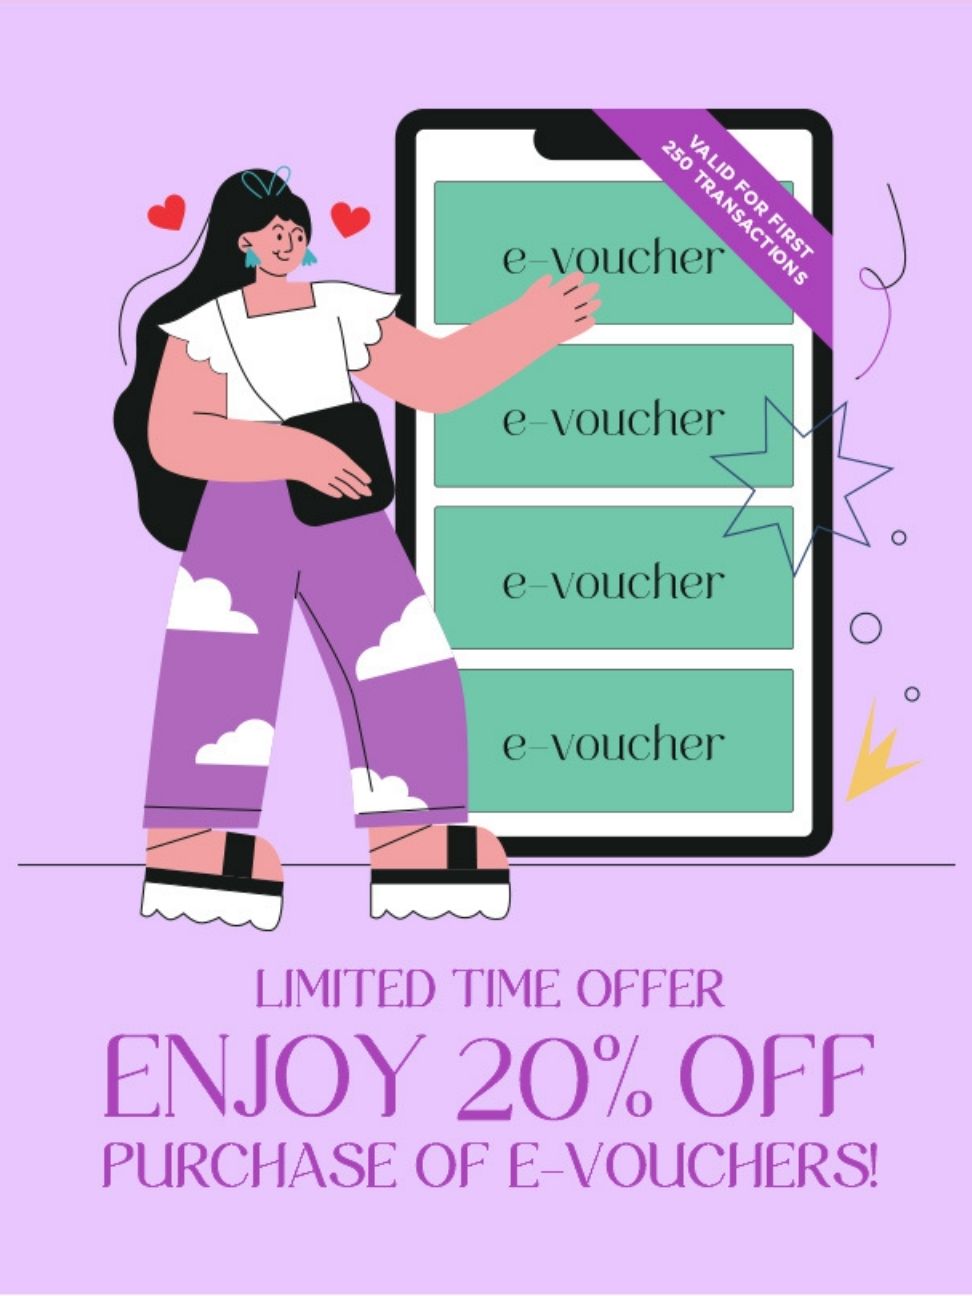 Enjoy 20% off purchase of e-vouchers